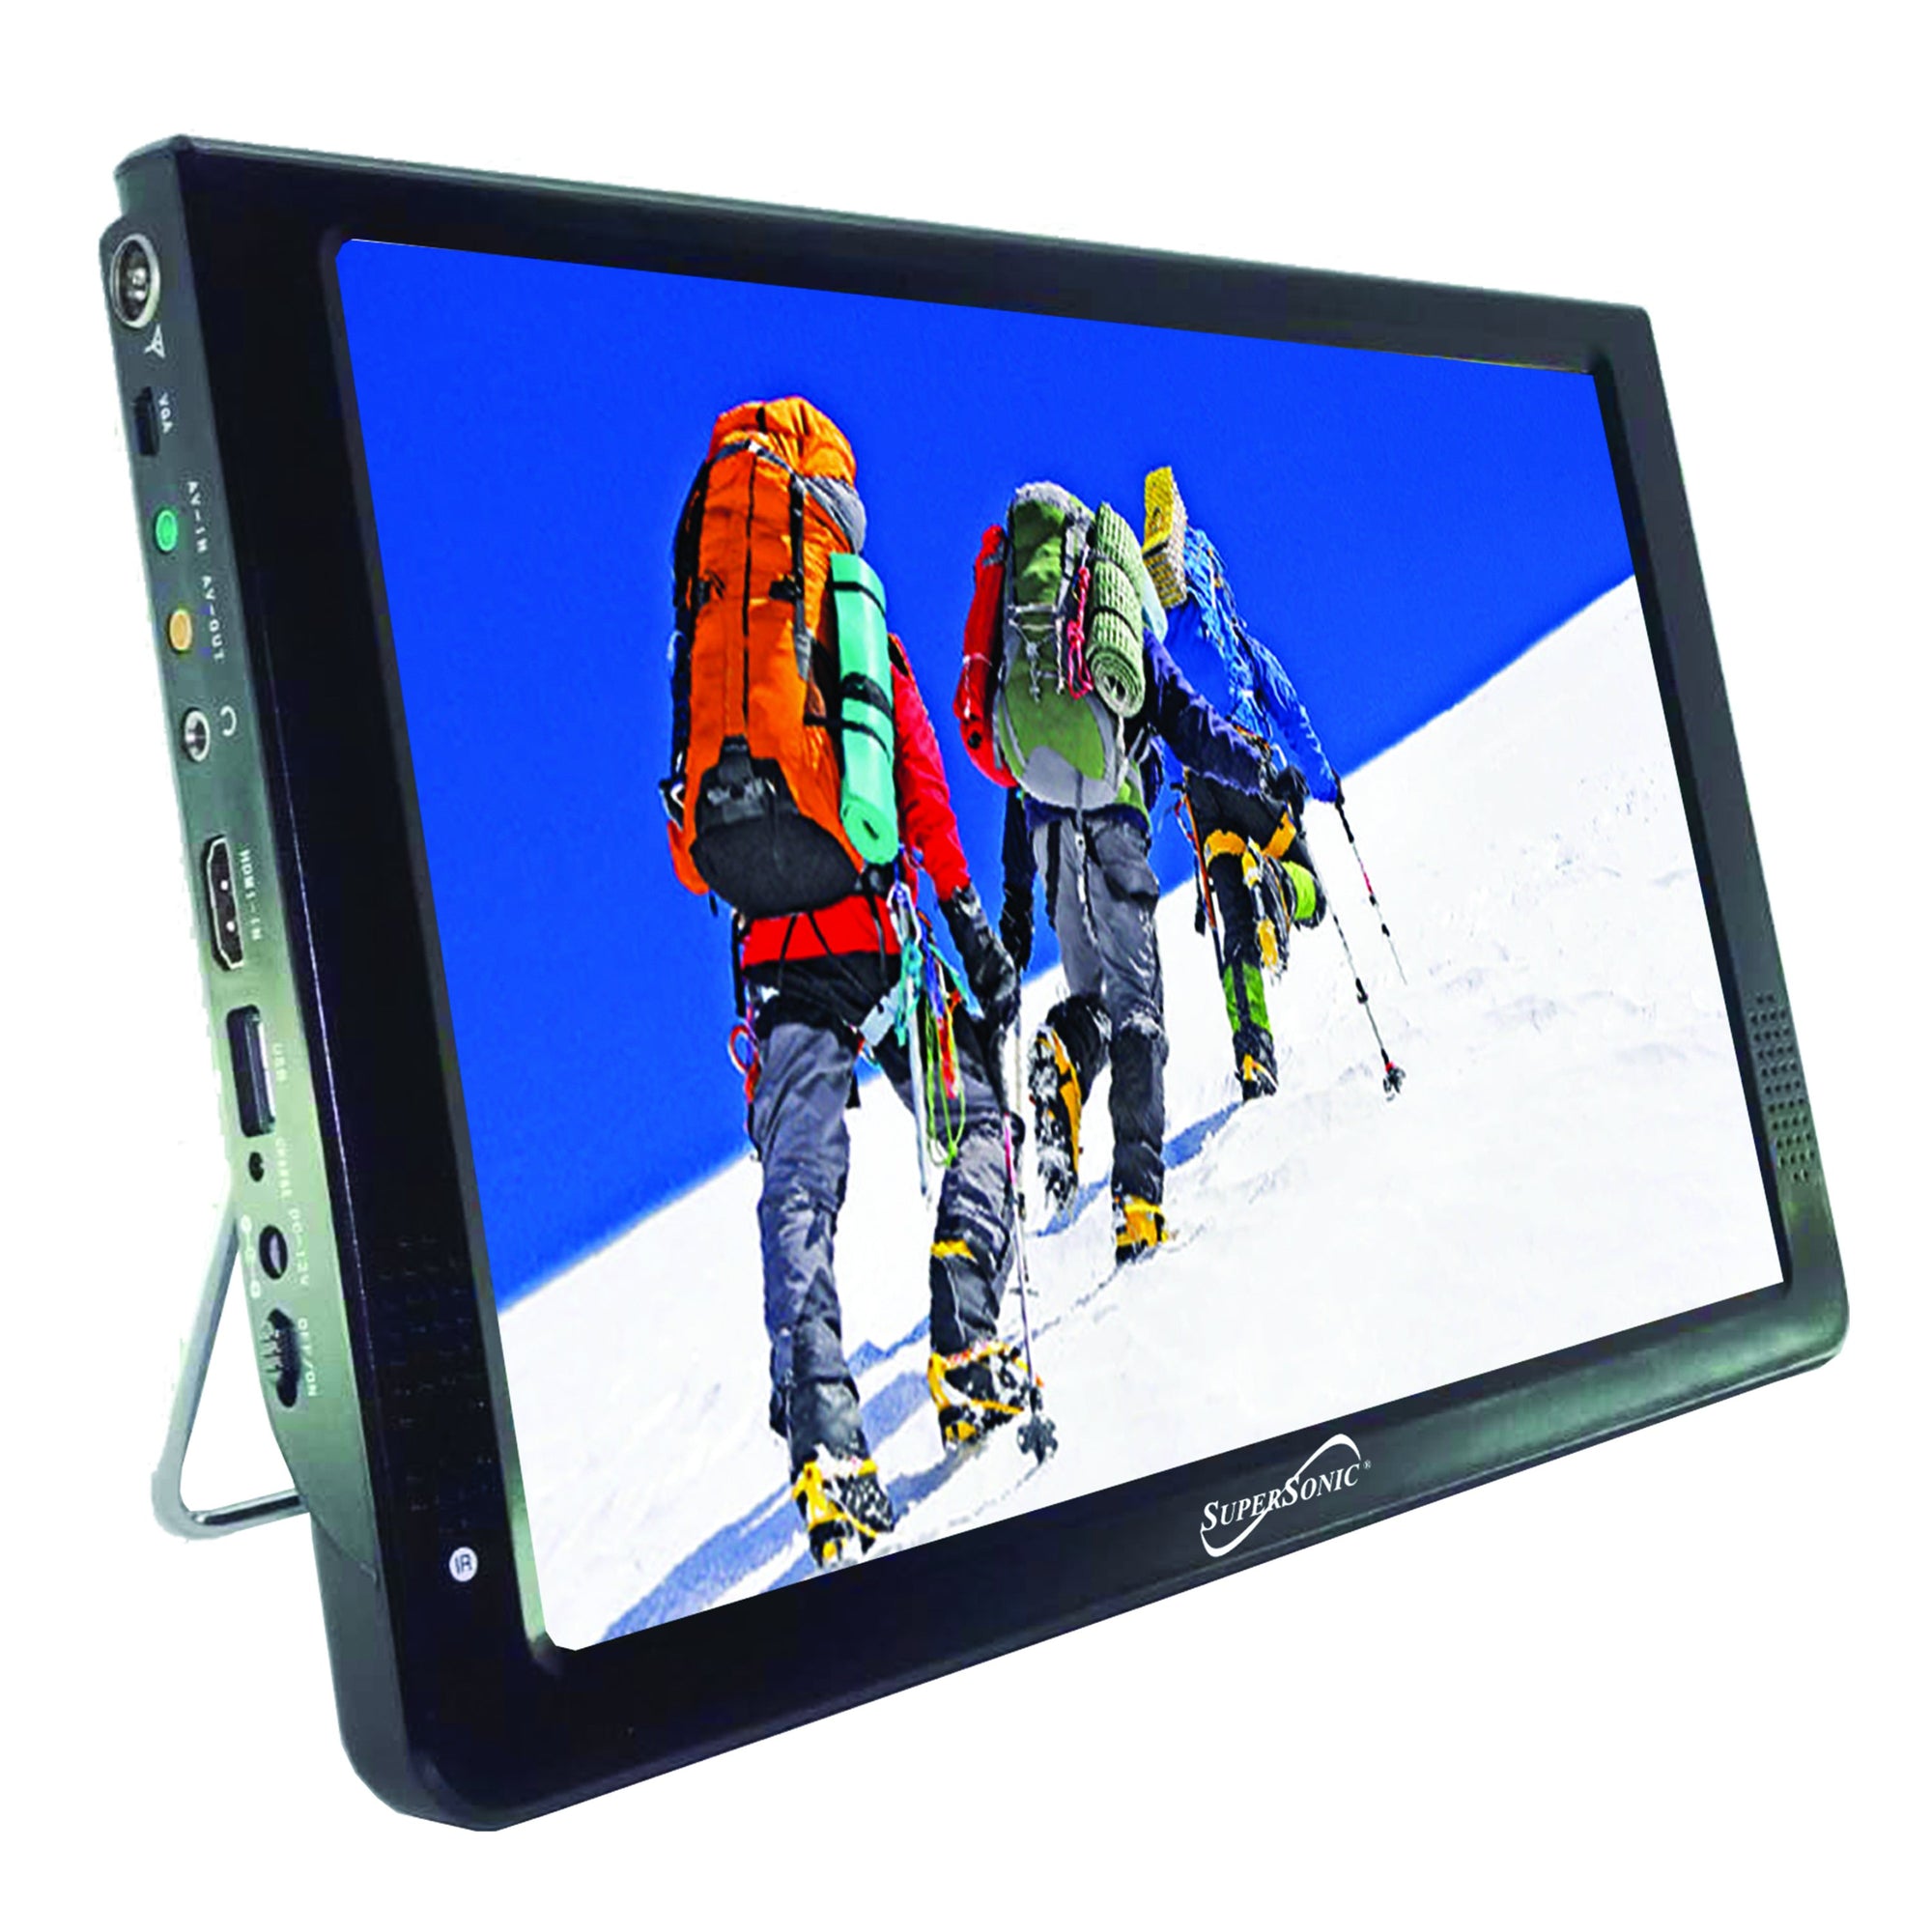 Supersonic 12 Portable Digital LED TV w USB & SD Inputs, 12V AC